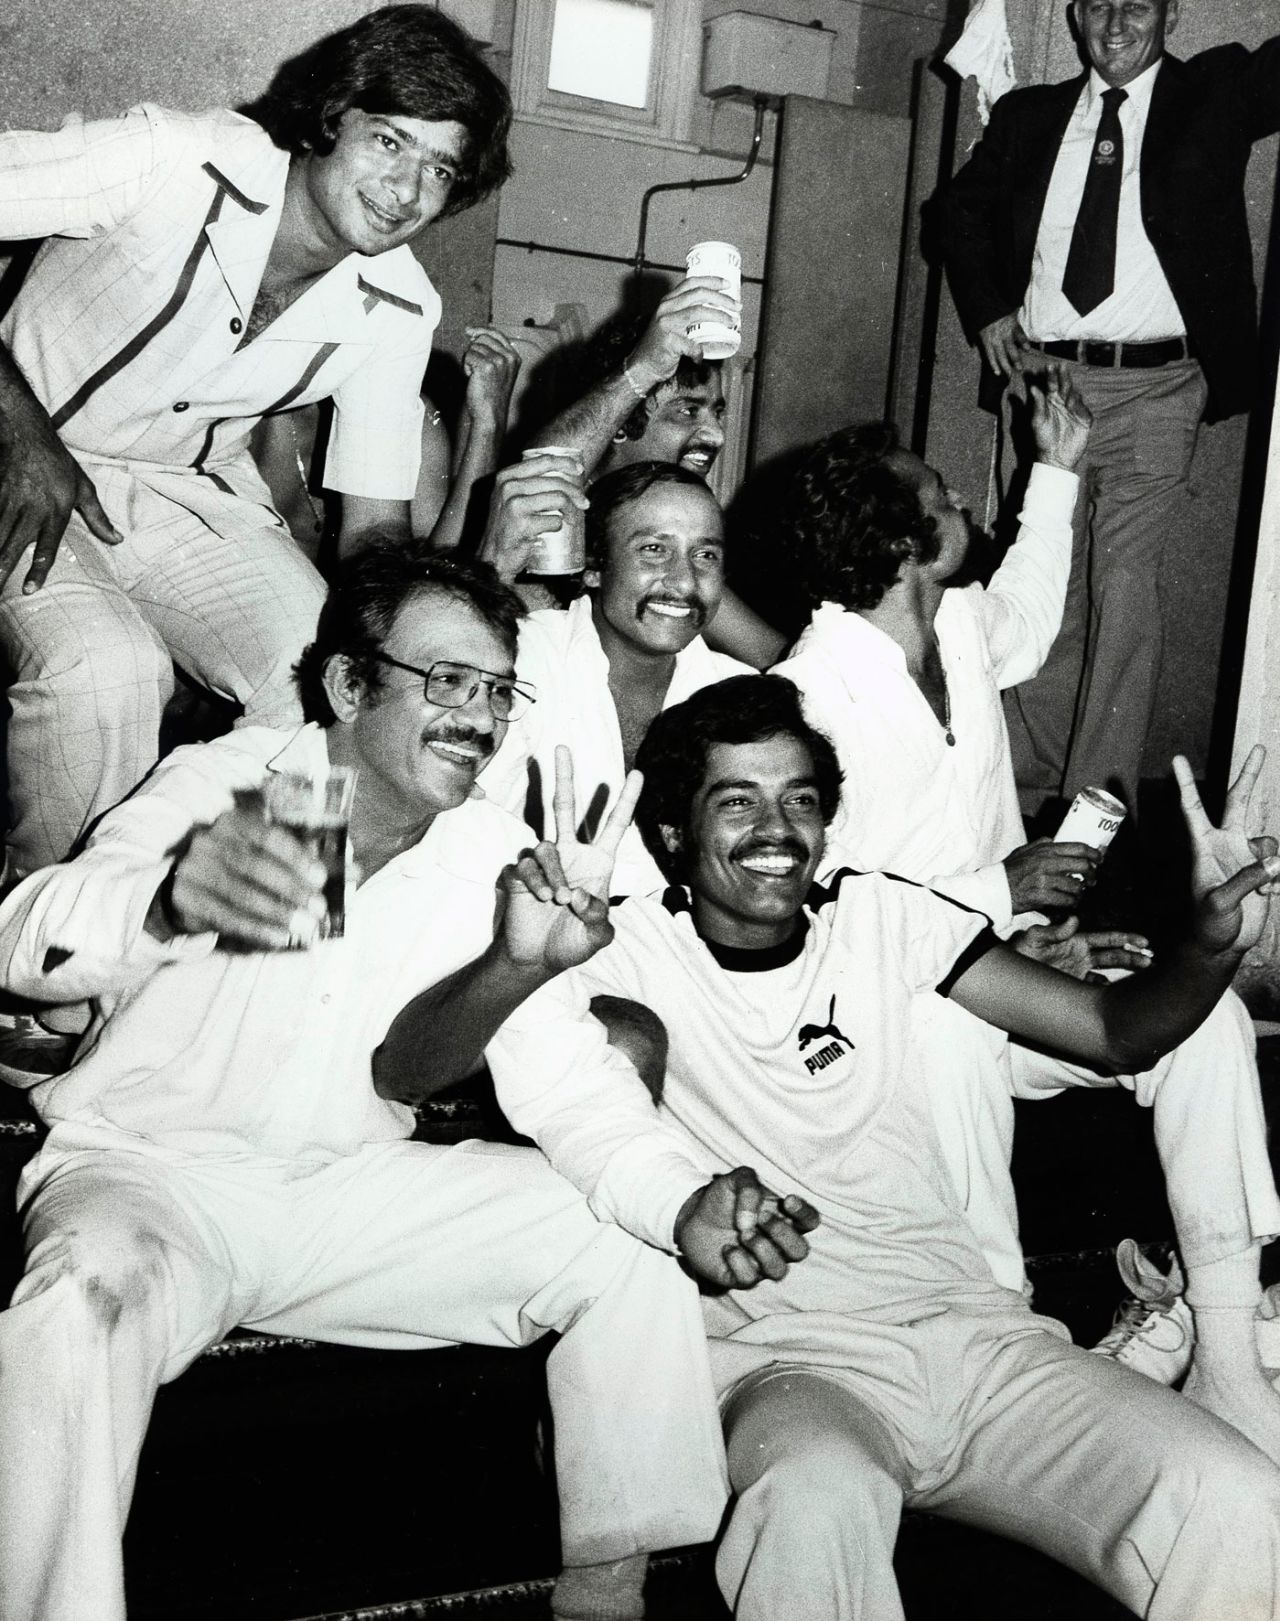 Indian players celebrate their innings win over Australia. Clockwise from bottom: Dilip Vengsarkar, Ashok Mankad, Karsan Ghavri, Syed Kirman, Gundappa Viswanath and Bhagwath Chandrasekhar, Australia v India, 4th Test, Sydney, 5th day, January 12, 1978